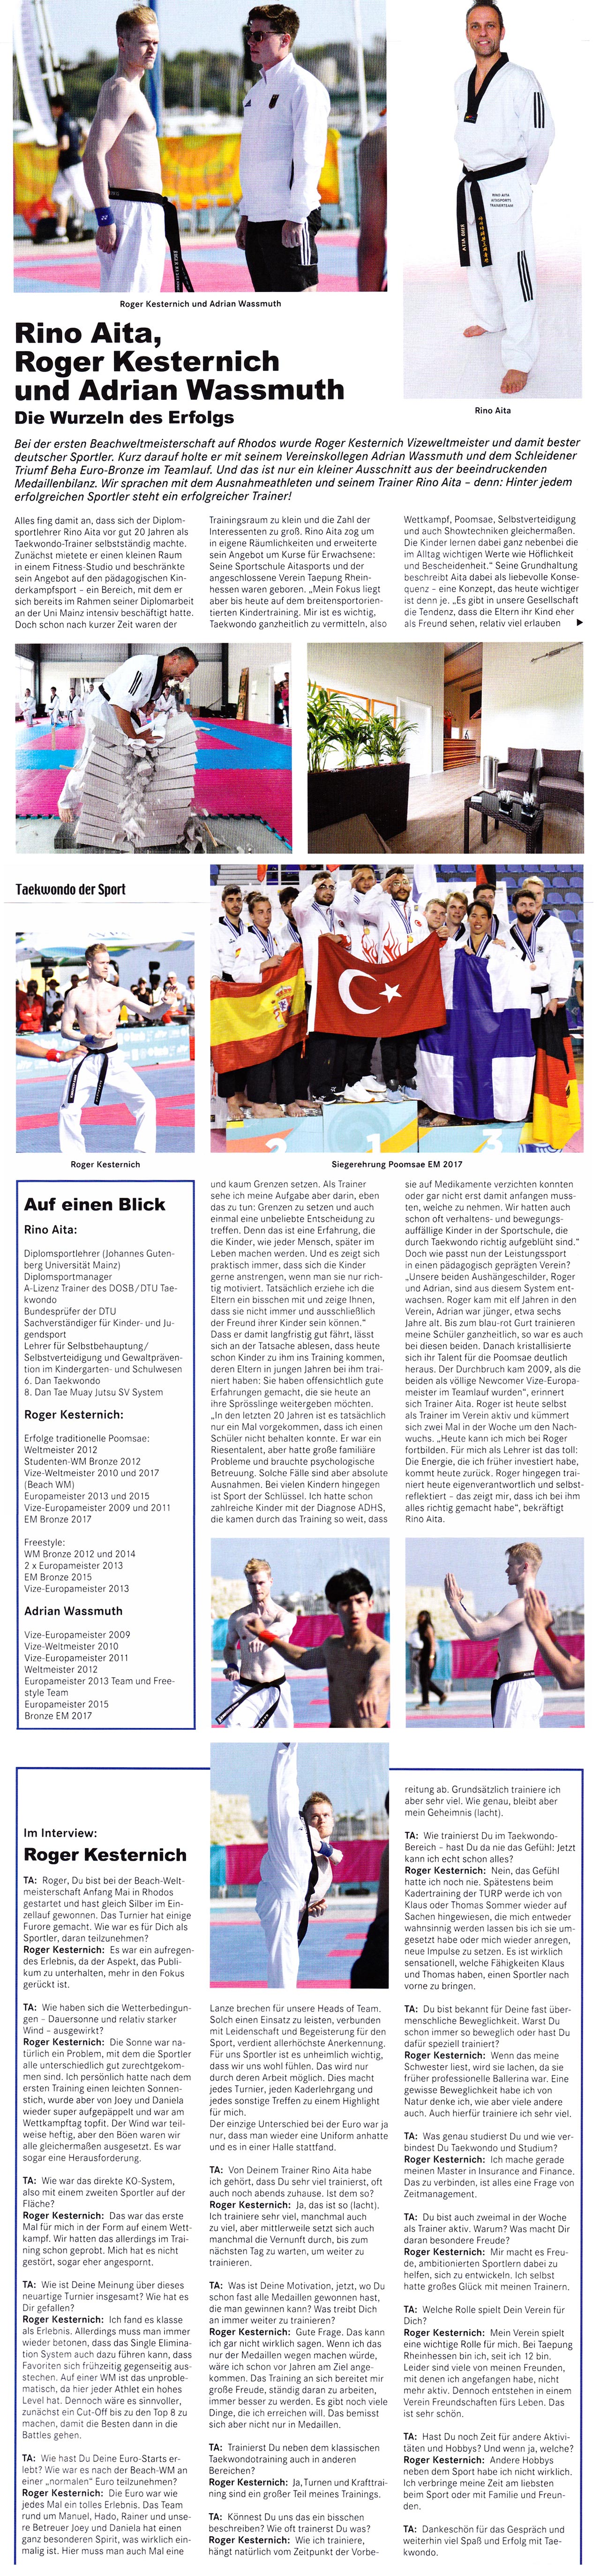 Zeitungsartikel über AITASPORTS Sportler Roger Kesternich - Taekwondo Weltmeister 